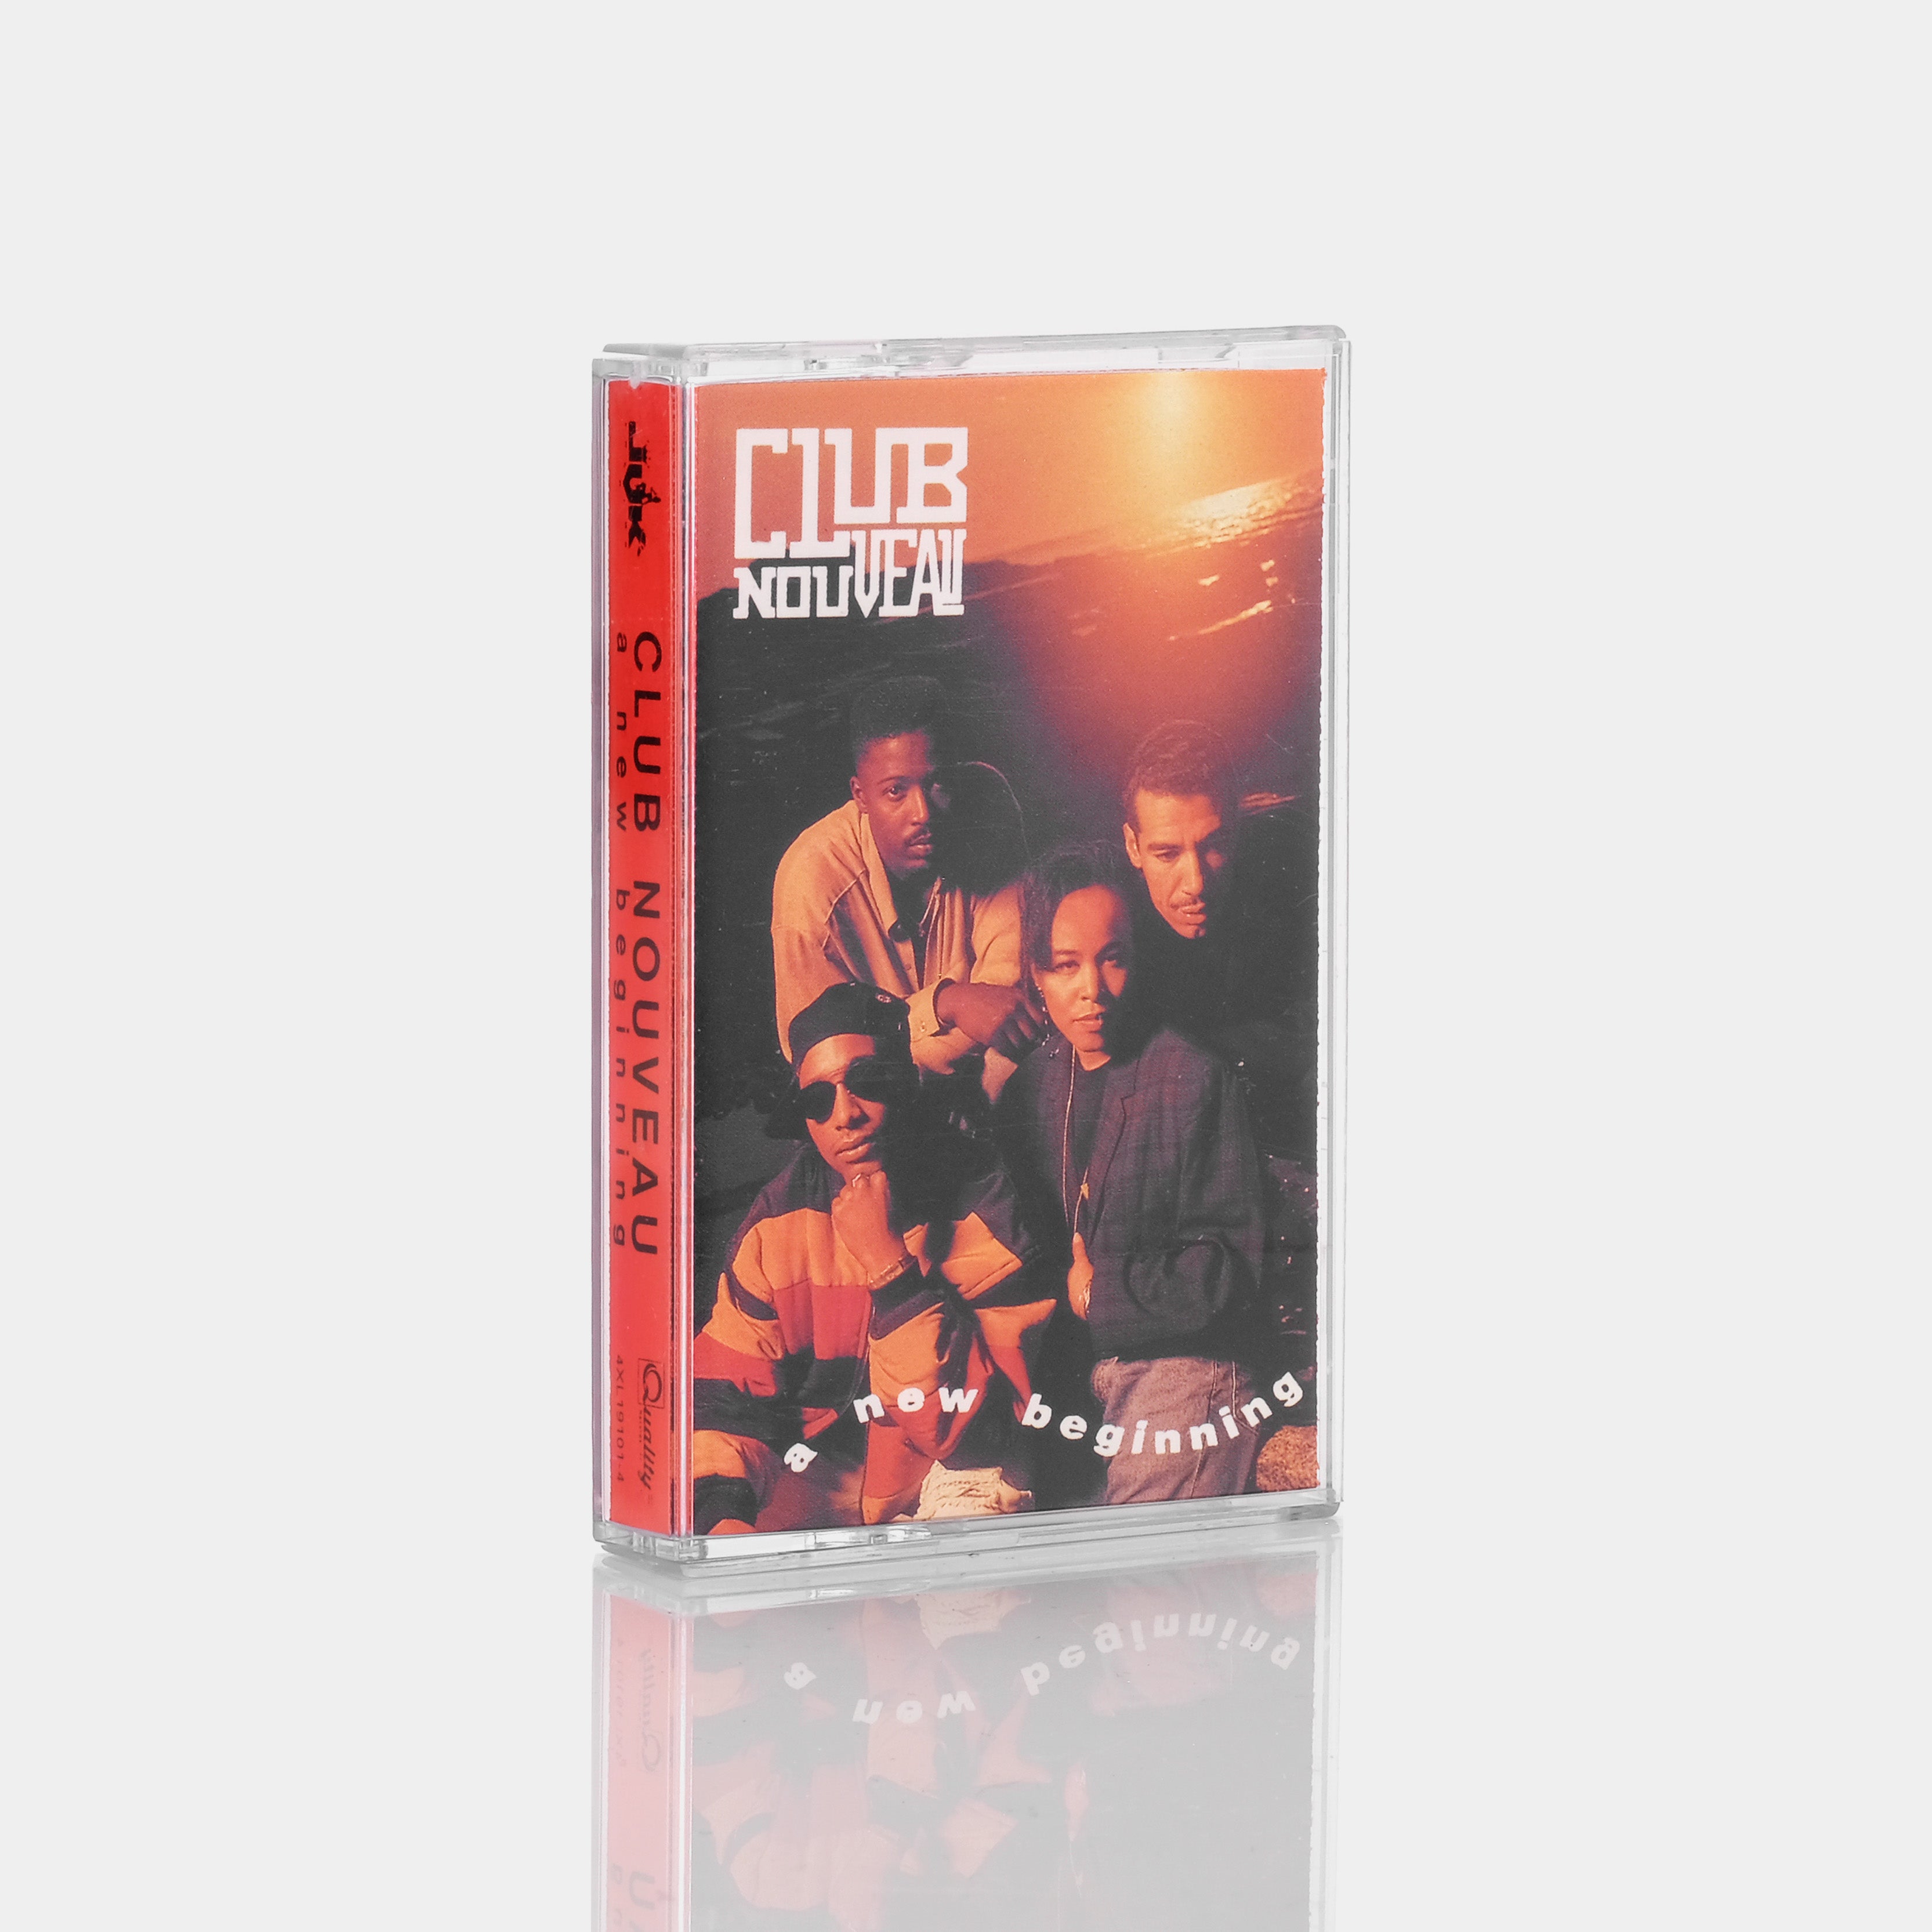 Club Nouveau - A New Beginning Cassette Tape